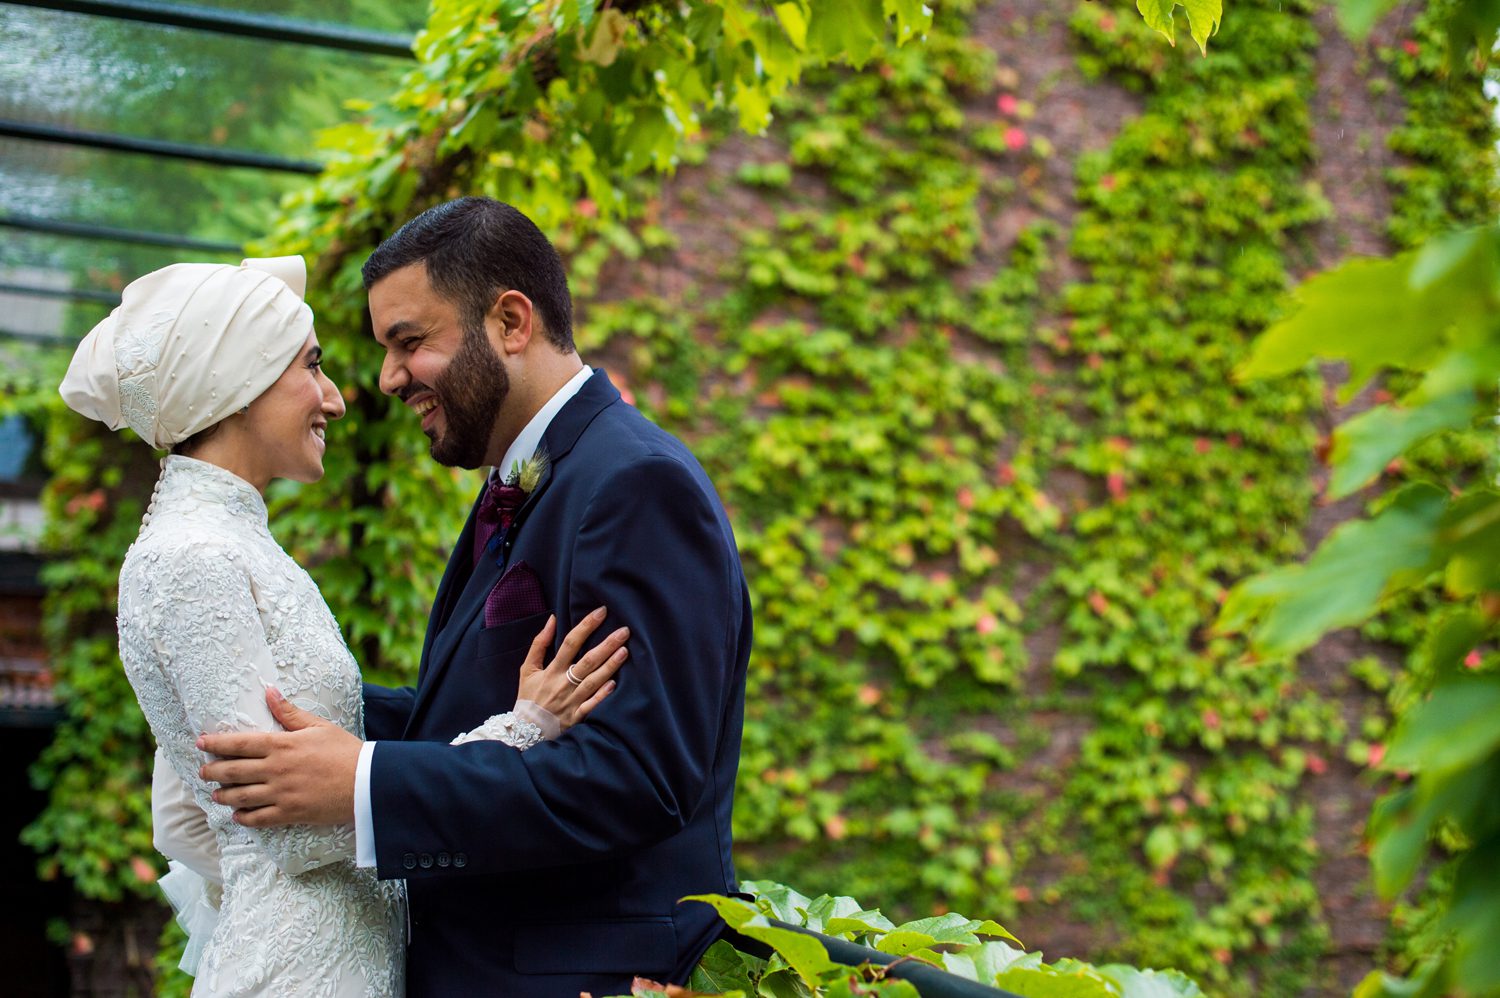 Muslim Wedding Photos